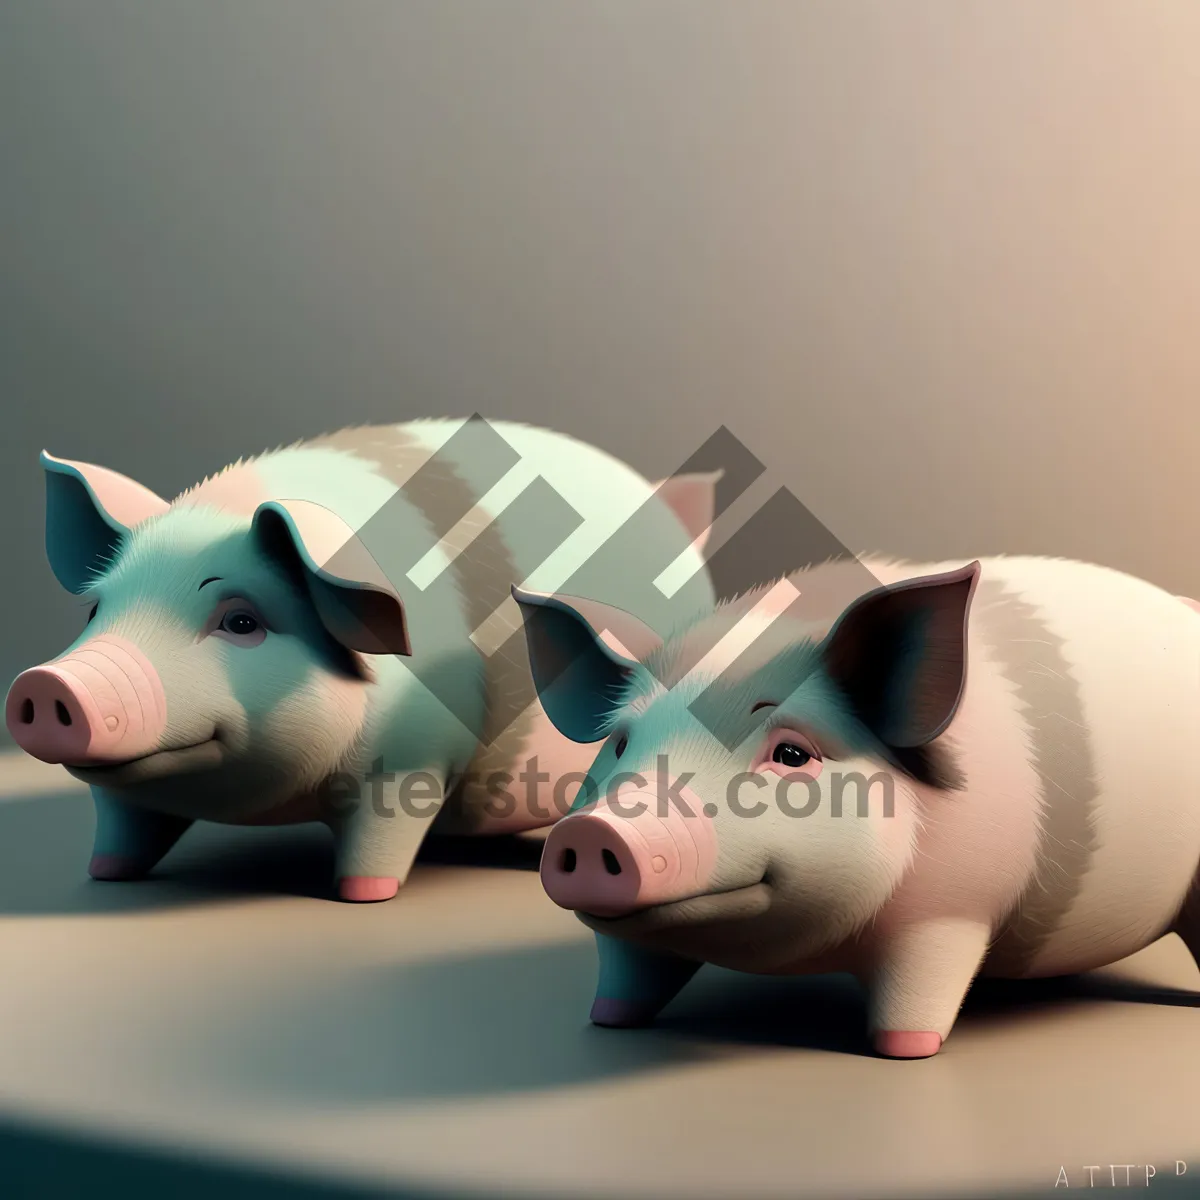 Picture of Pink Ceramic Piggy Bank Full of Savings